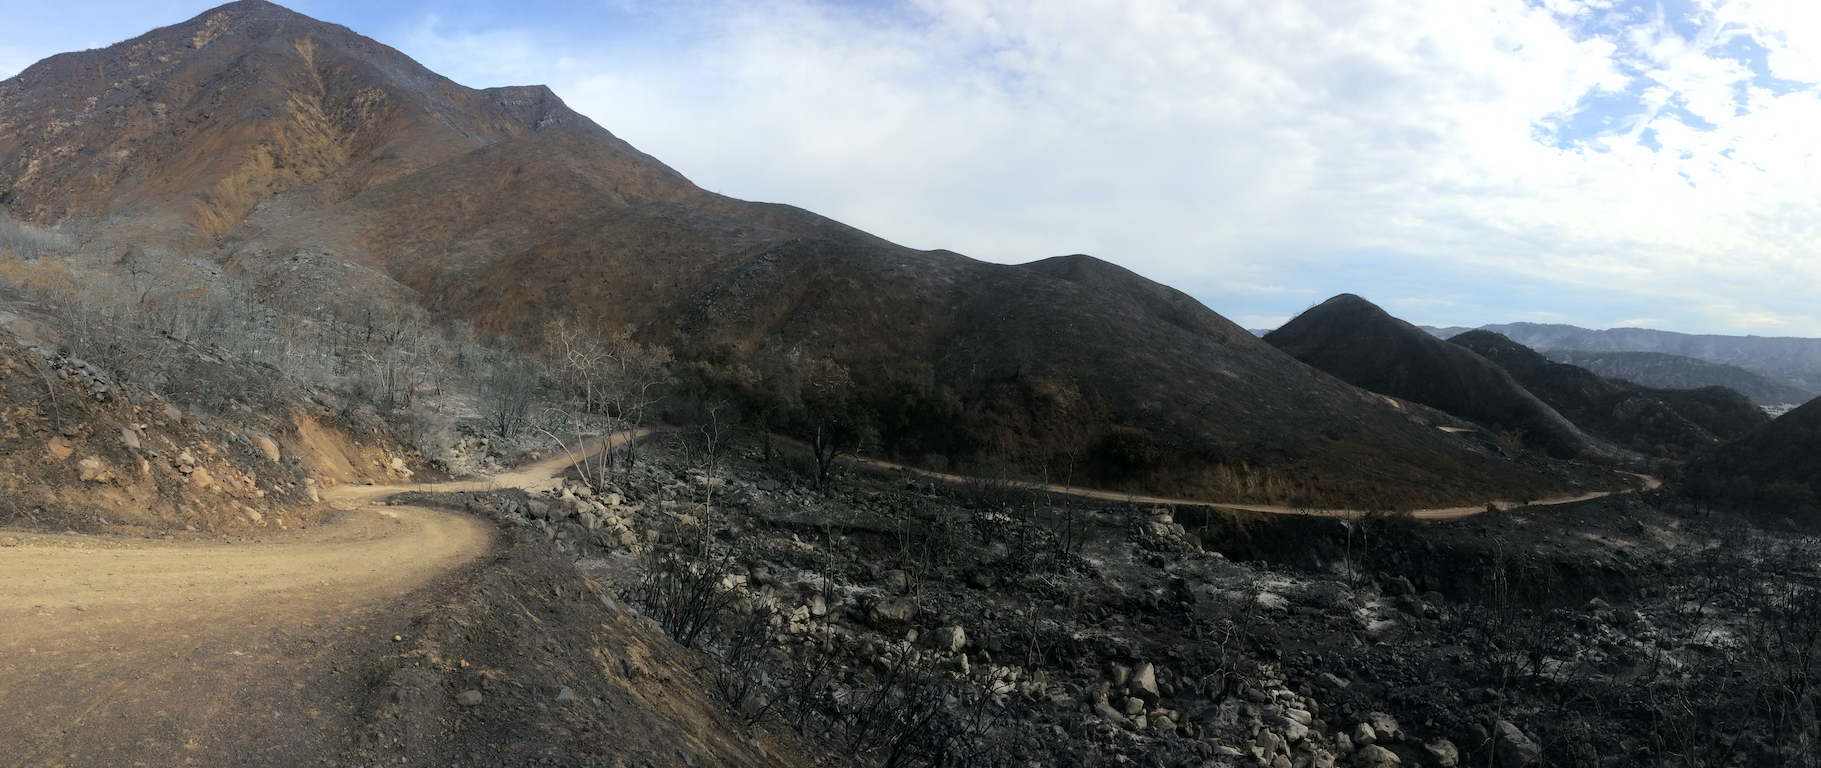 Thomas Fire aftermath above Pratt Trail